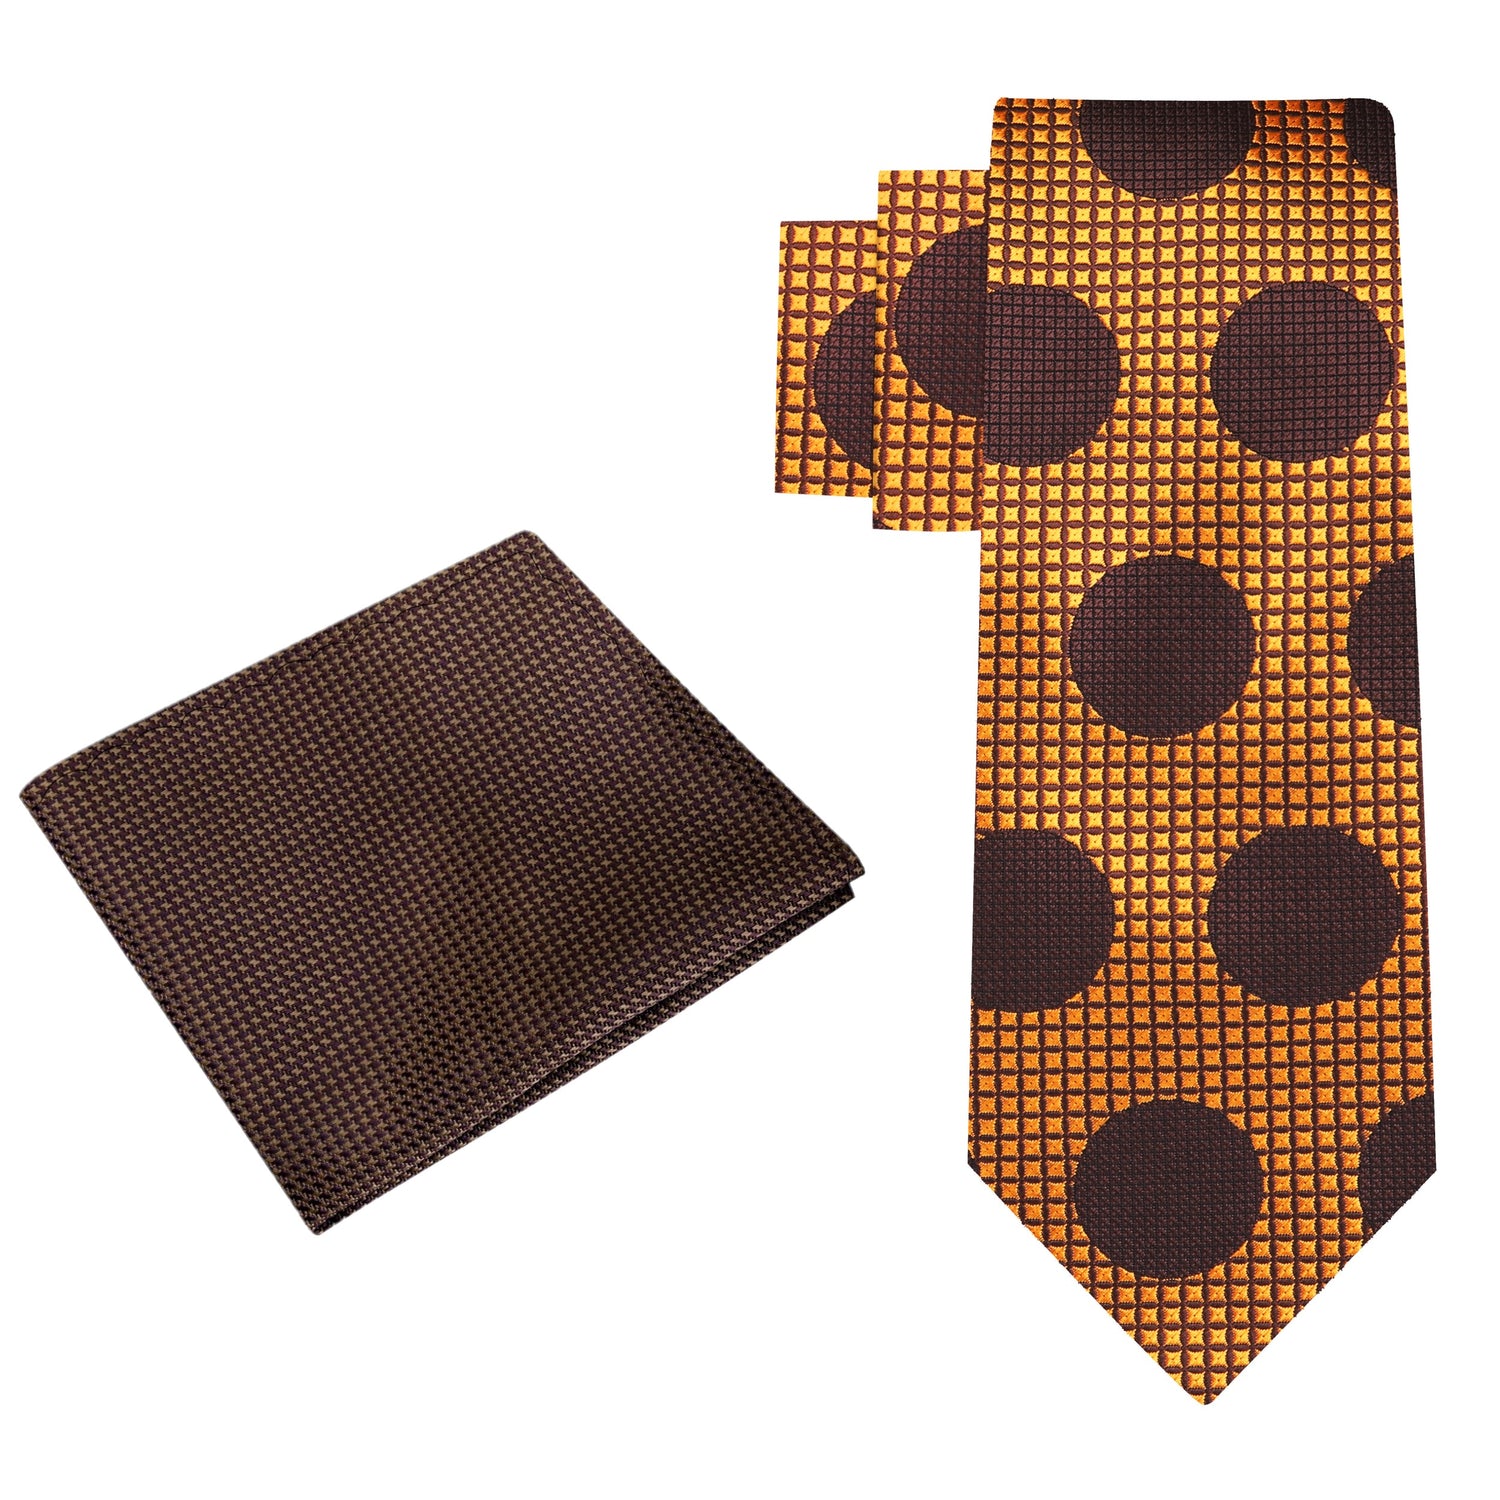 Alt view: Golden Orange, Brown Polka Tie and Brown Square